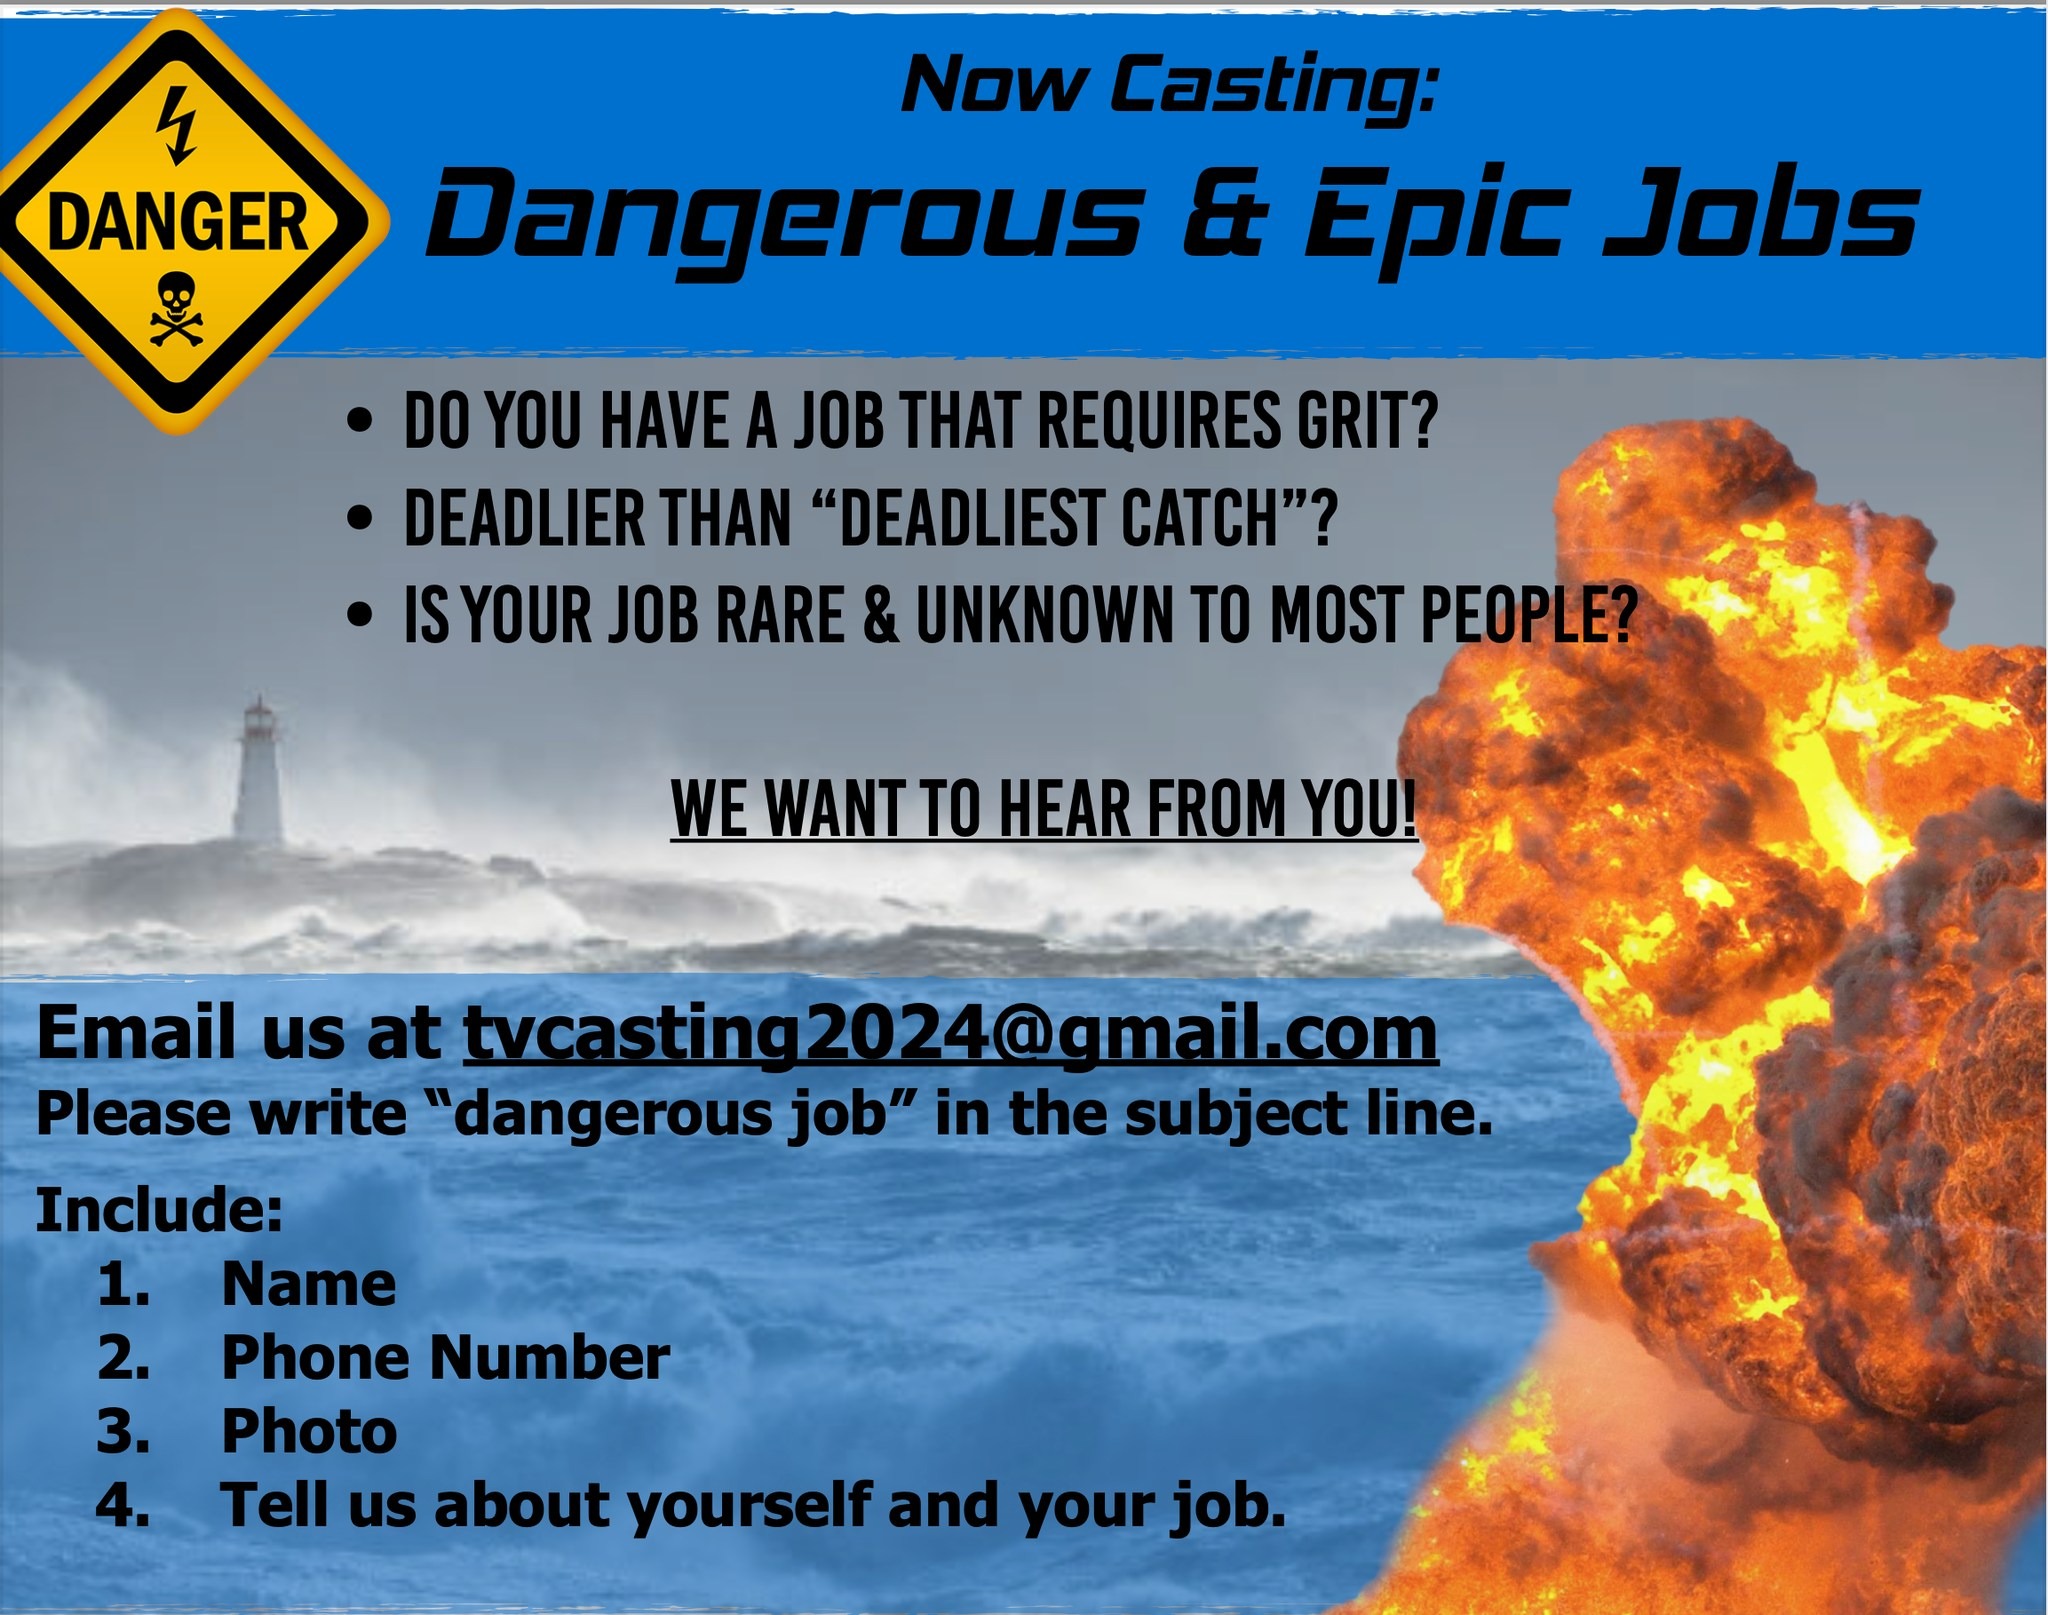 Dangerous & Epic Jobs